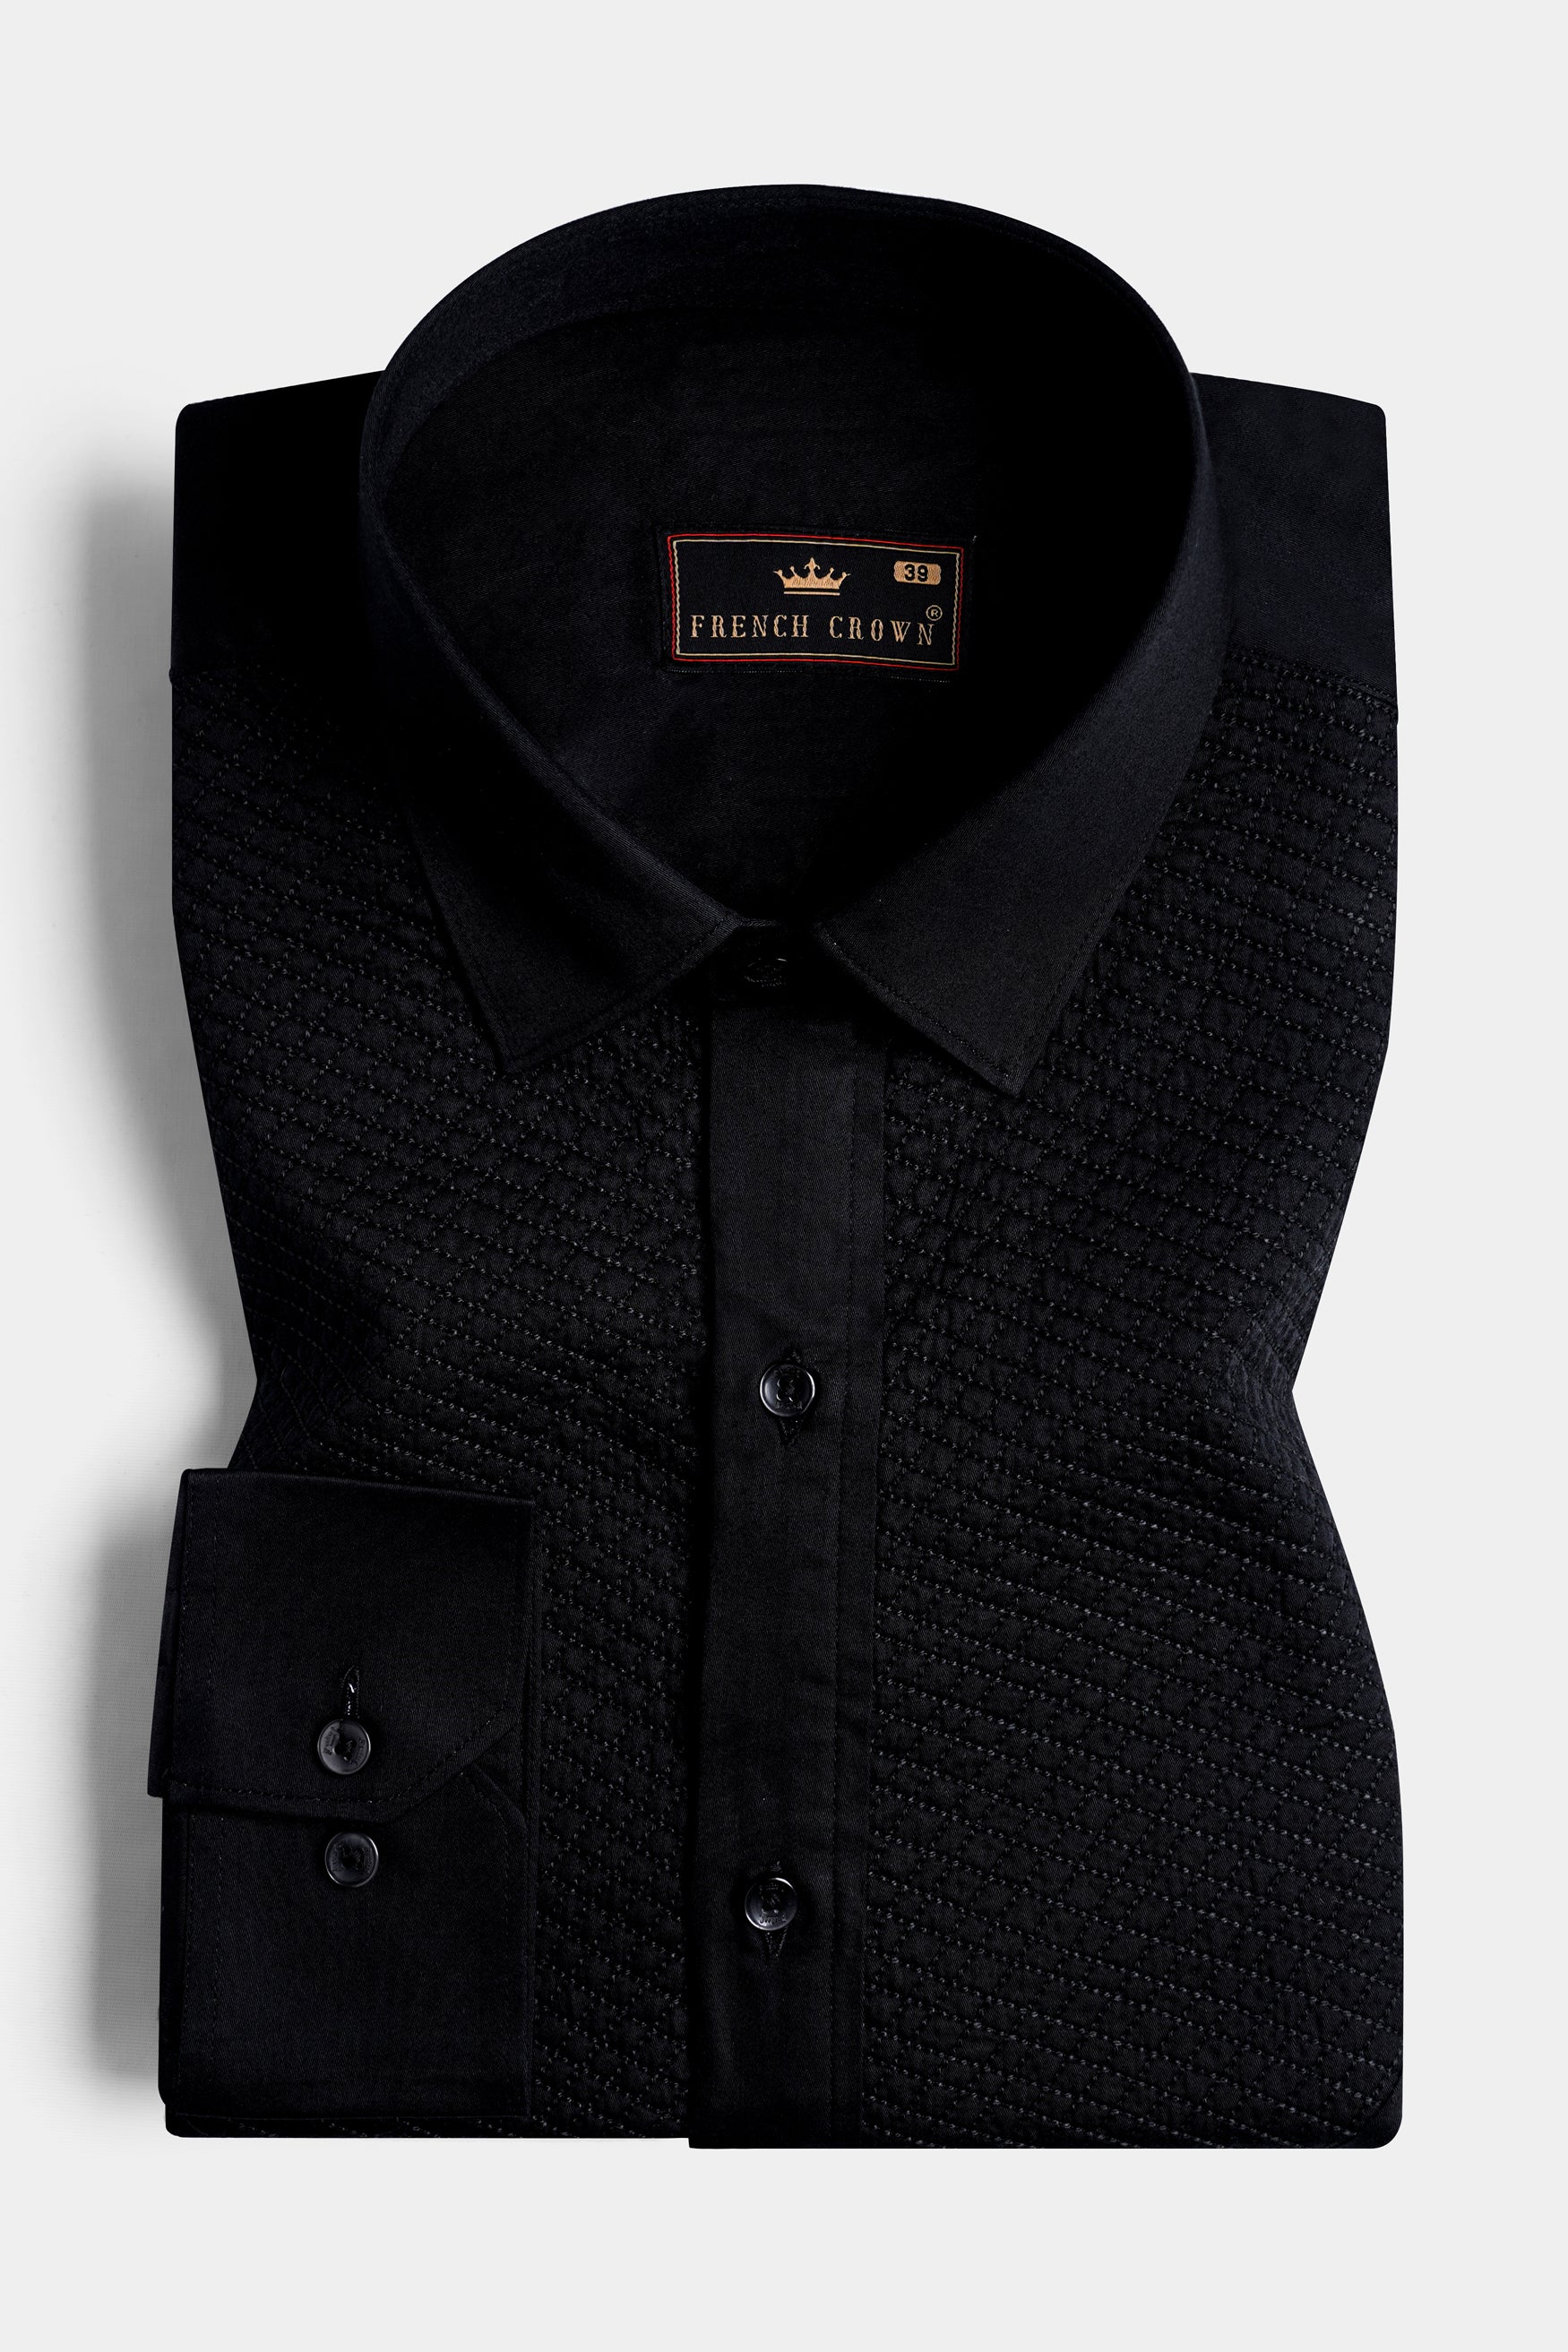 Jade Black Super Soft Premium Cotton Embroidered Designer Tuxedo Shirt